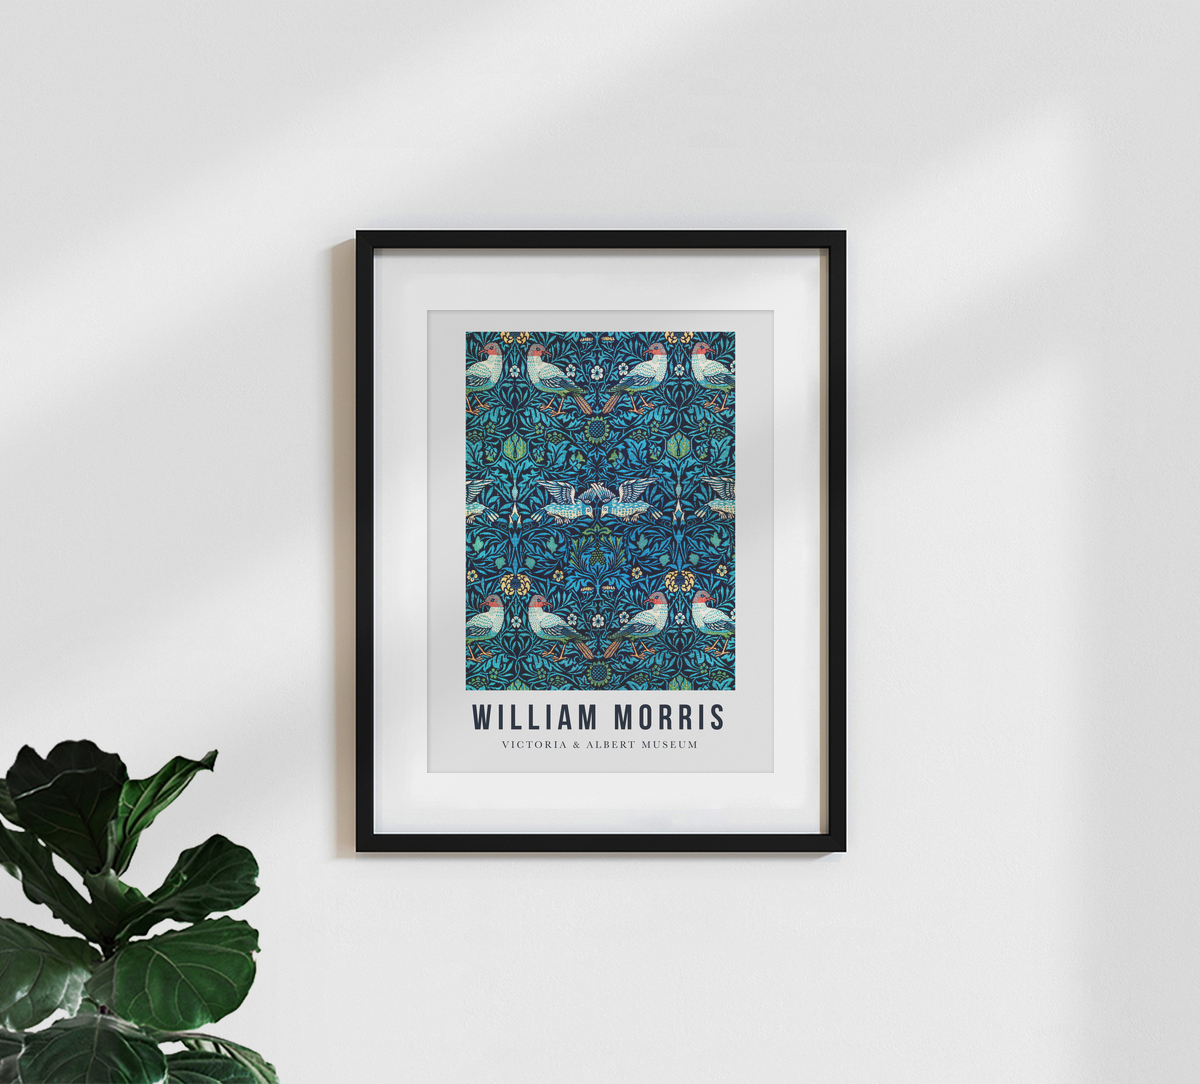 Botsing Kikker Vlak Art Classics wall art - 'William Morris exhibition poster V&A' |  Photocircle.net